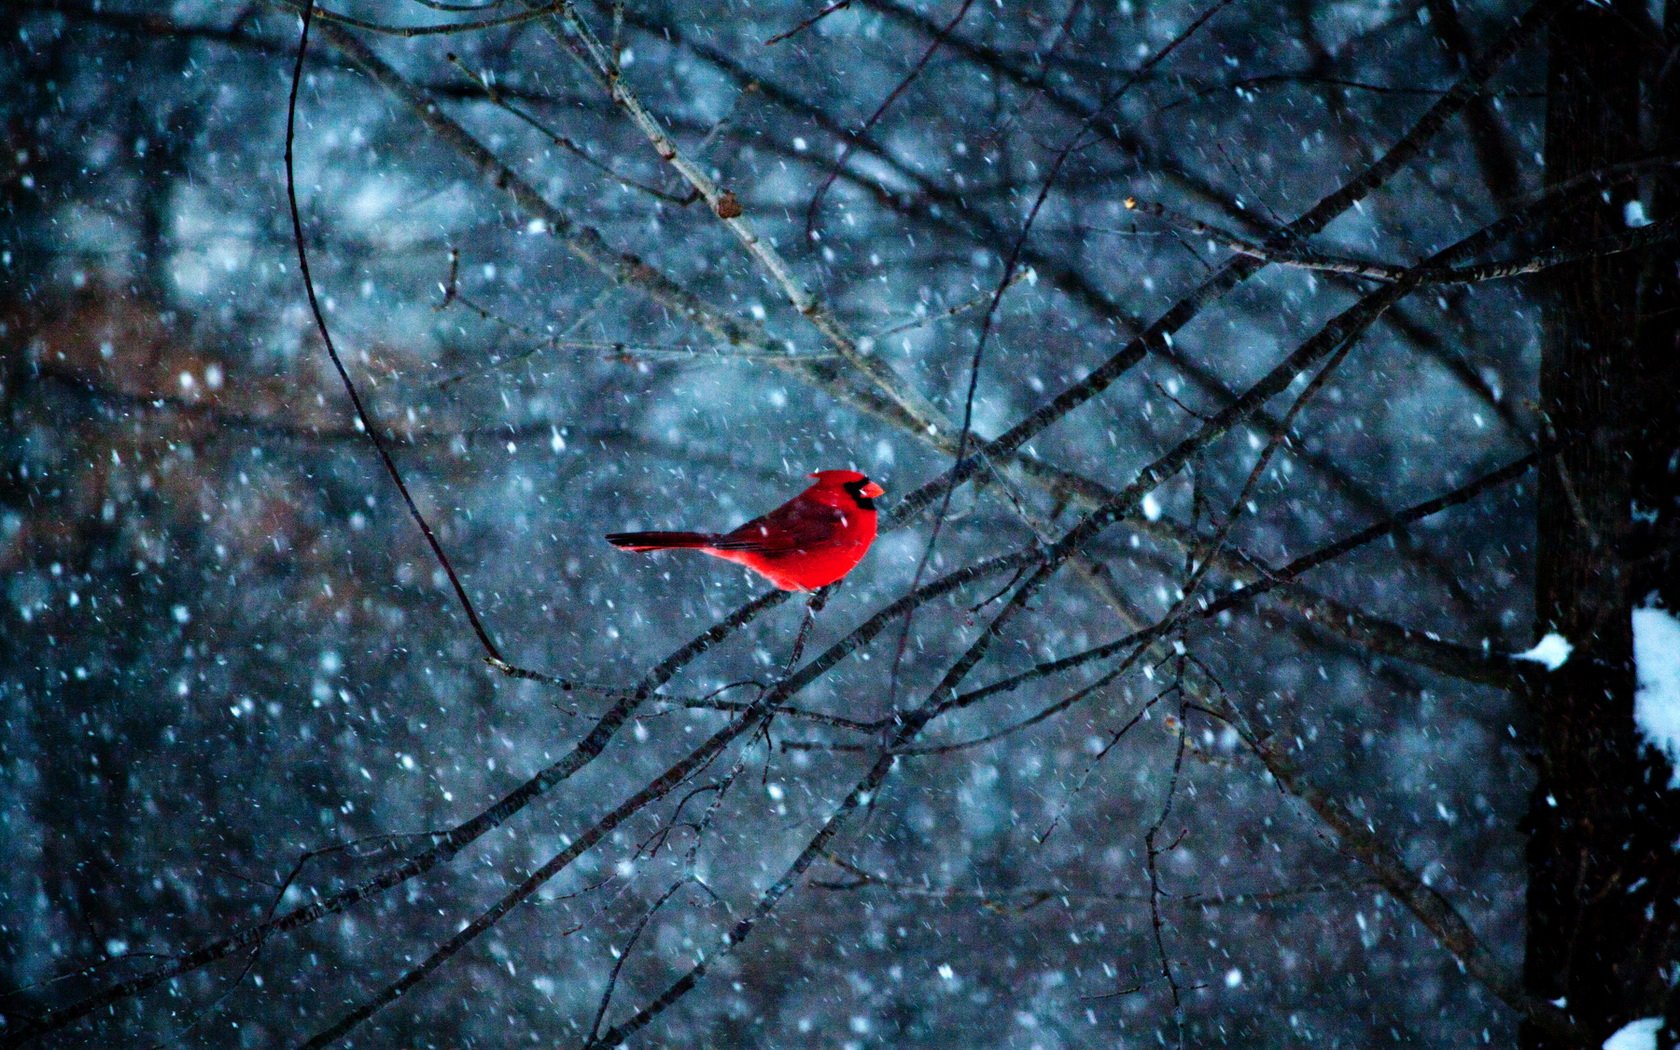 Red Bird in Snowflakes wallpaper by LadyGaga RevelWallpapersnet 1680x1050